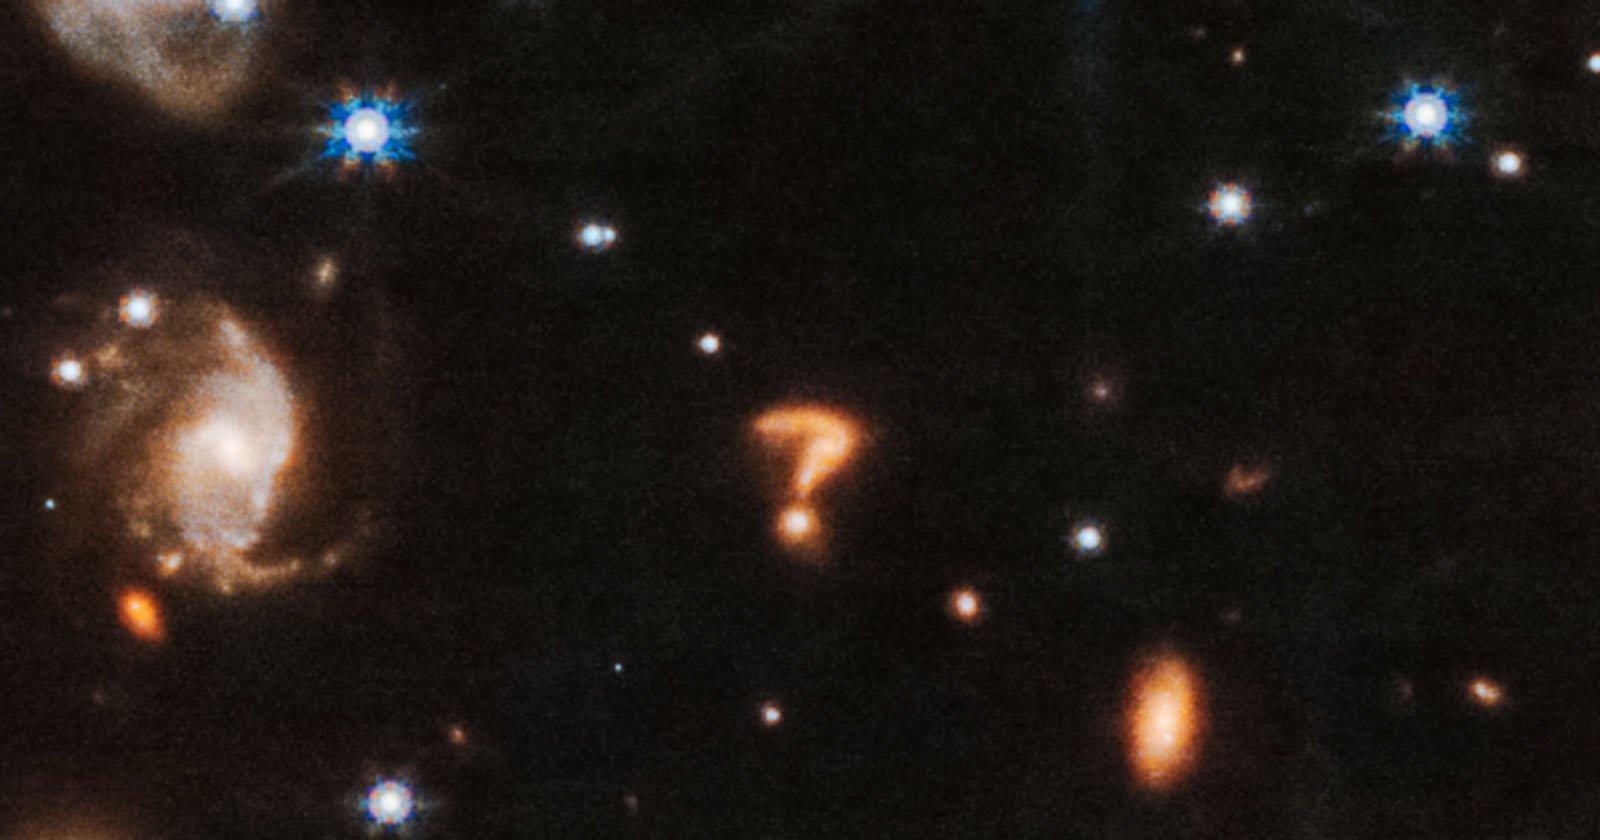  scientists explain cosmic question mark puzzled 